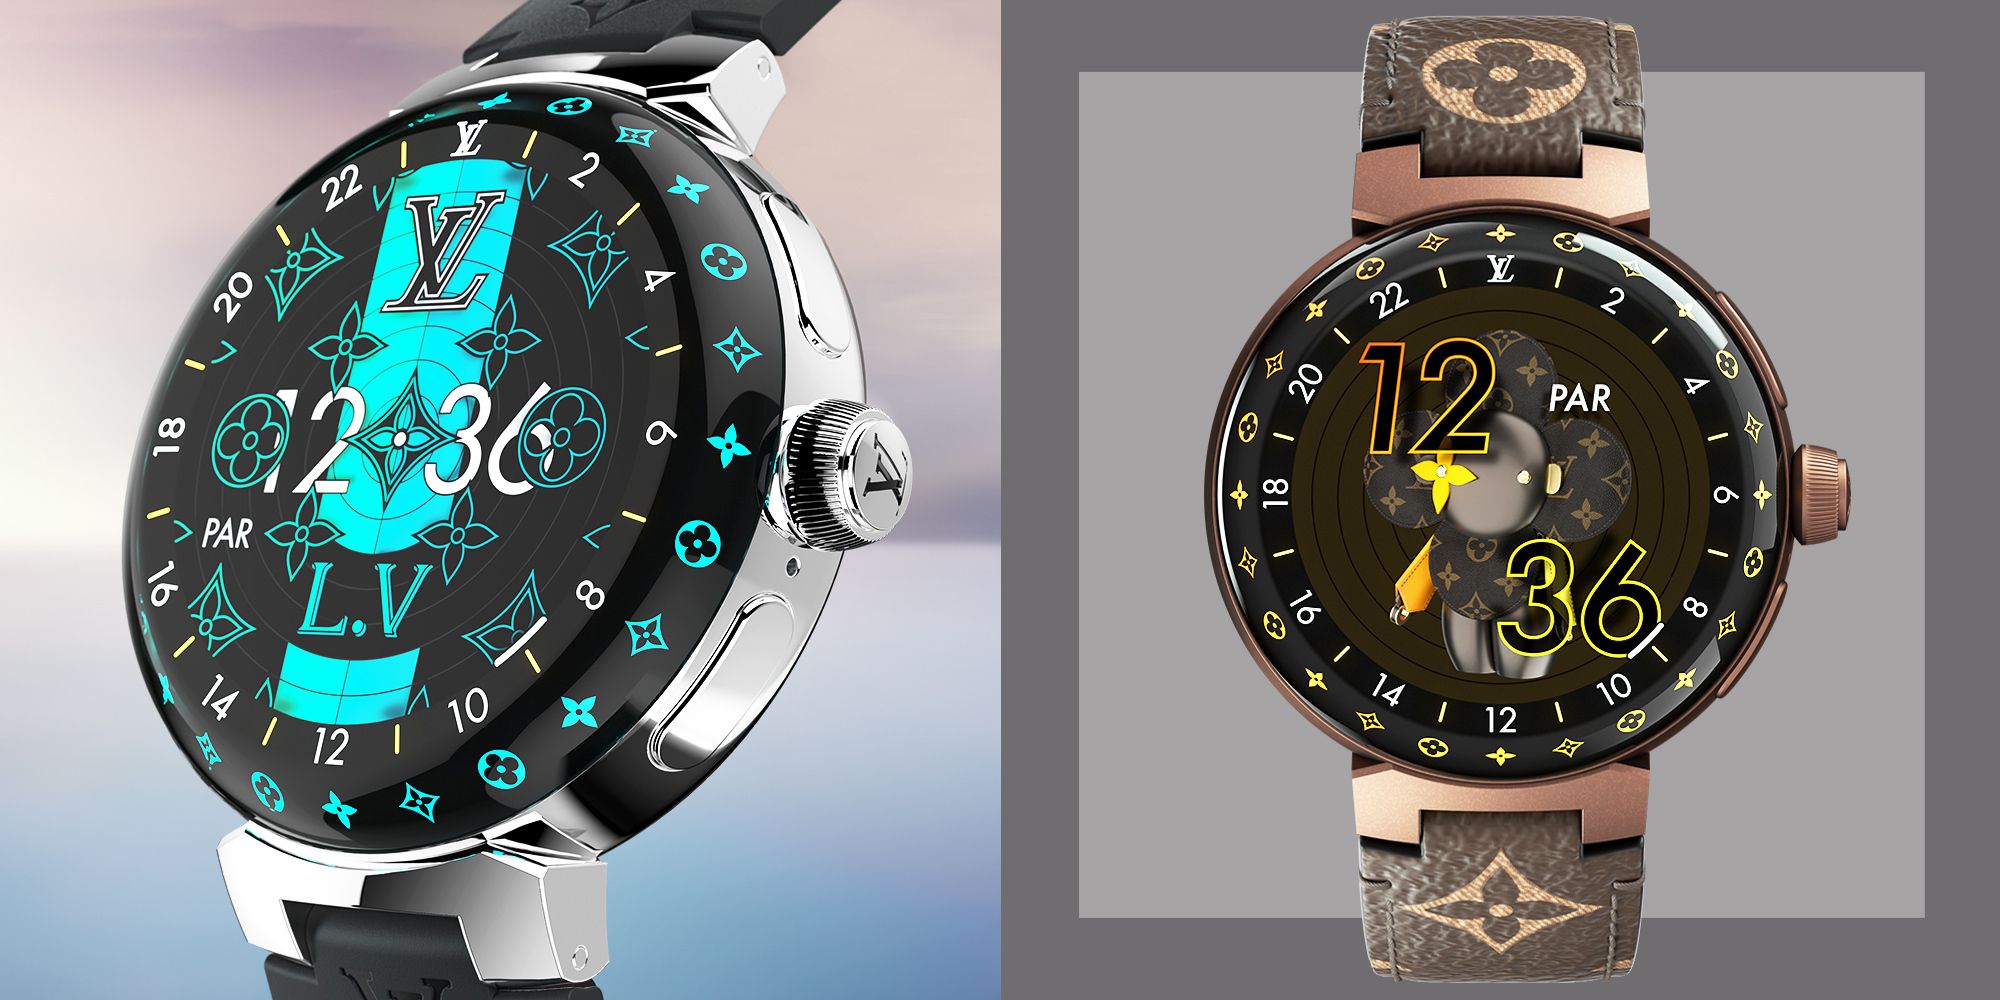 Louis Vuitton's new $3,500 smartwatch, Tambour Horizon Light Up